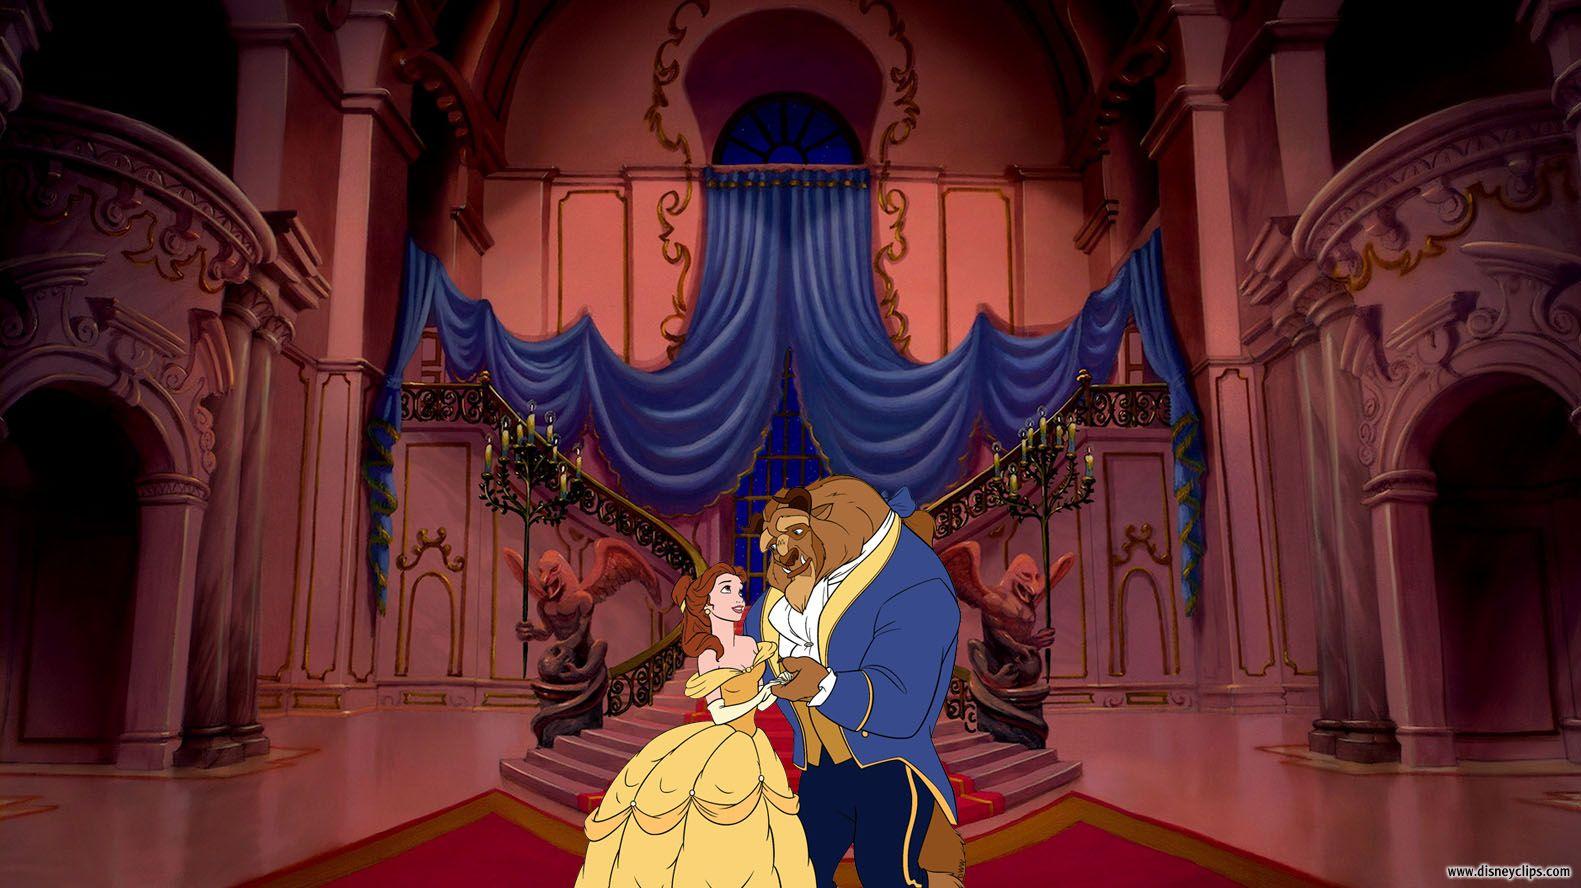 Beauty and the Beast Desktop Wallpaper. Disney's World of Wonders